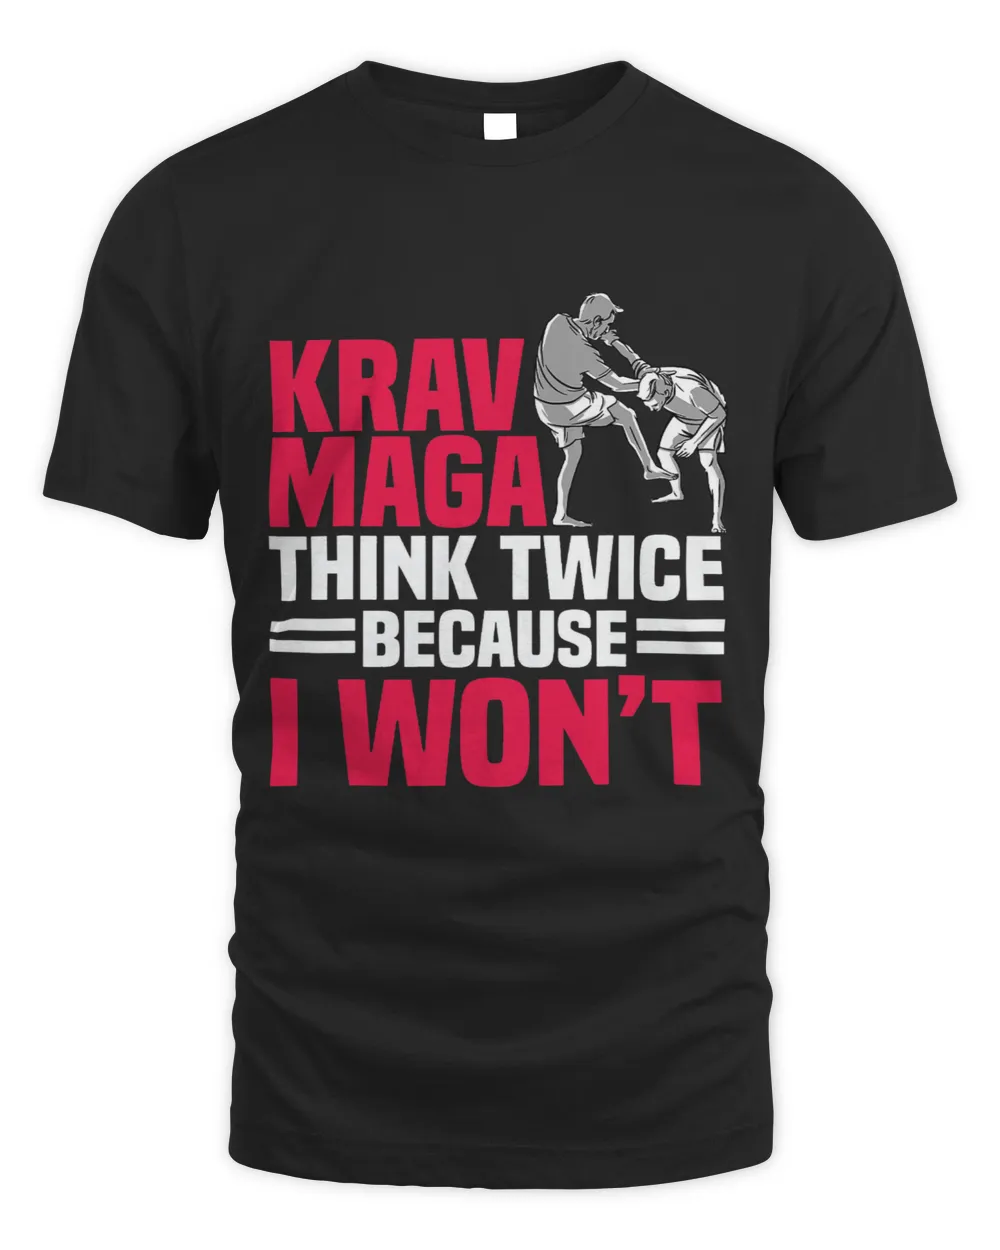 Krav Maga Full Contact Fighting Self Defense Contact Combat